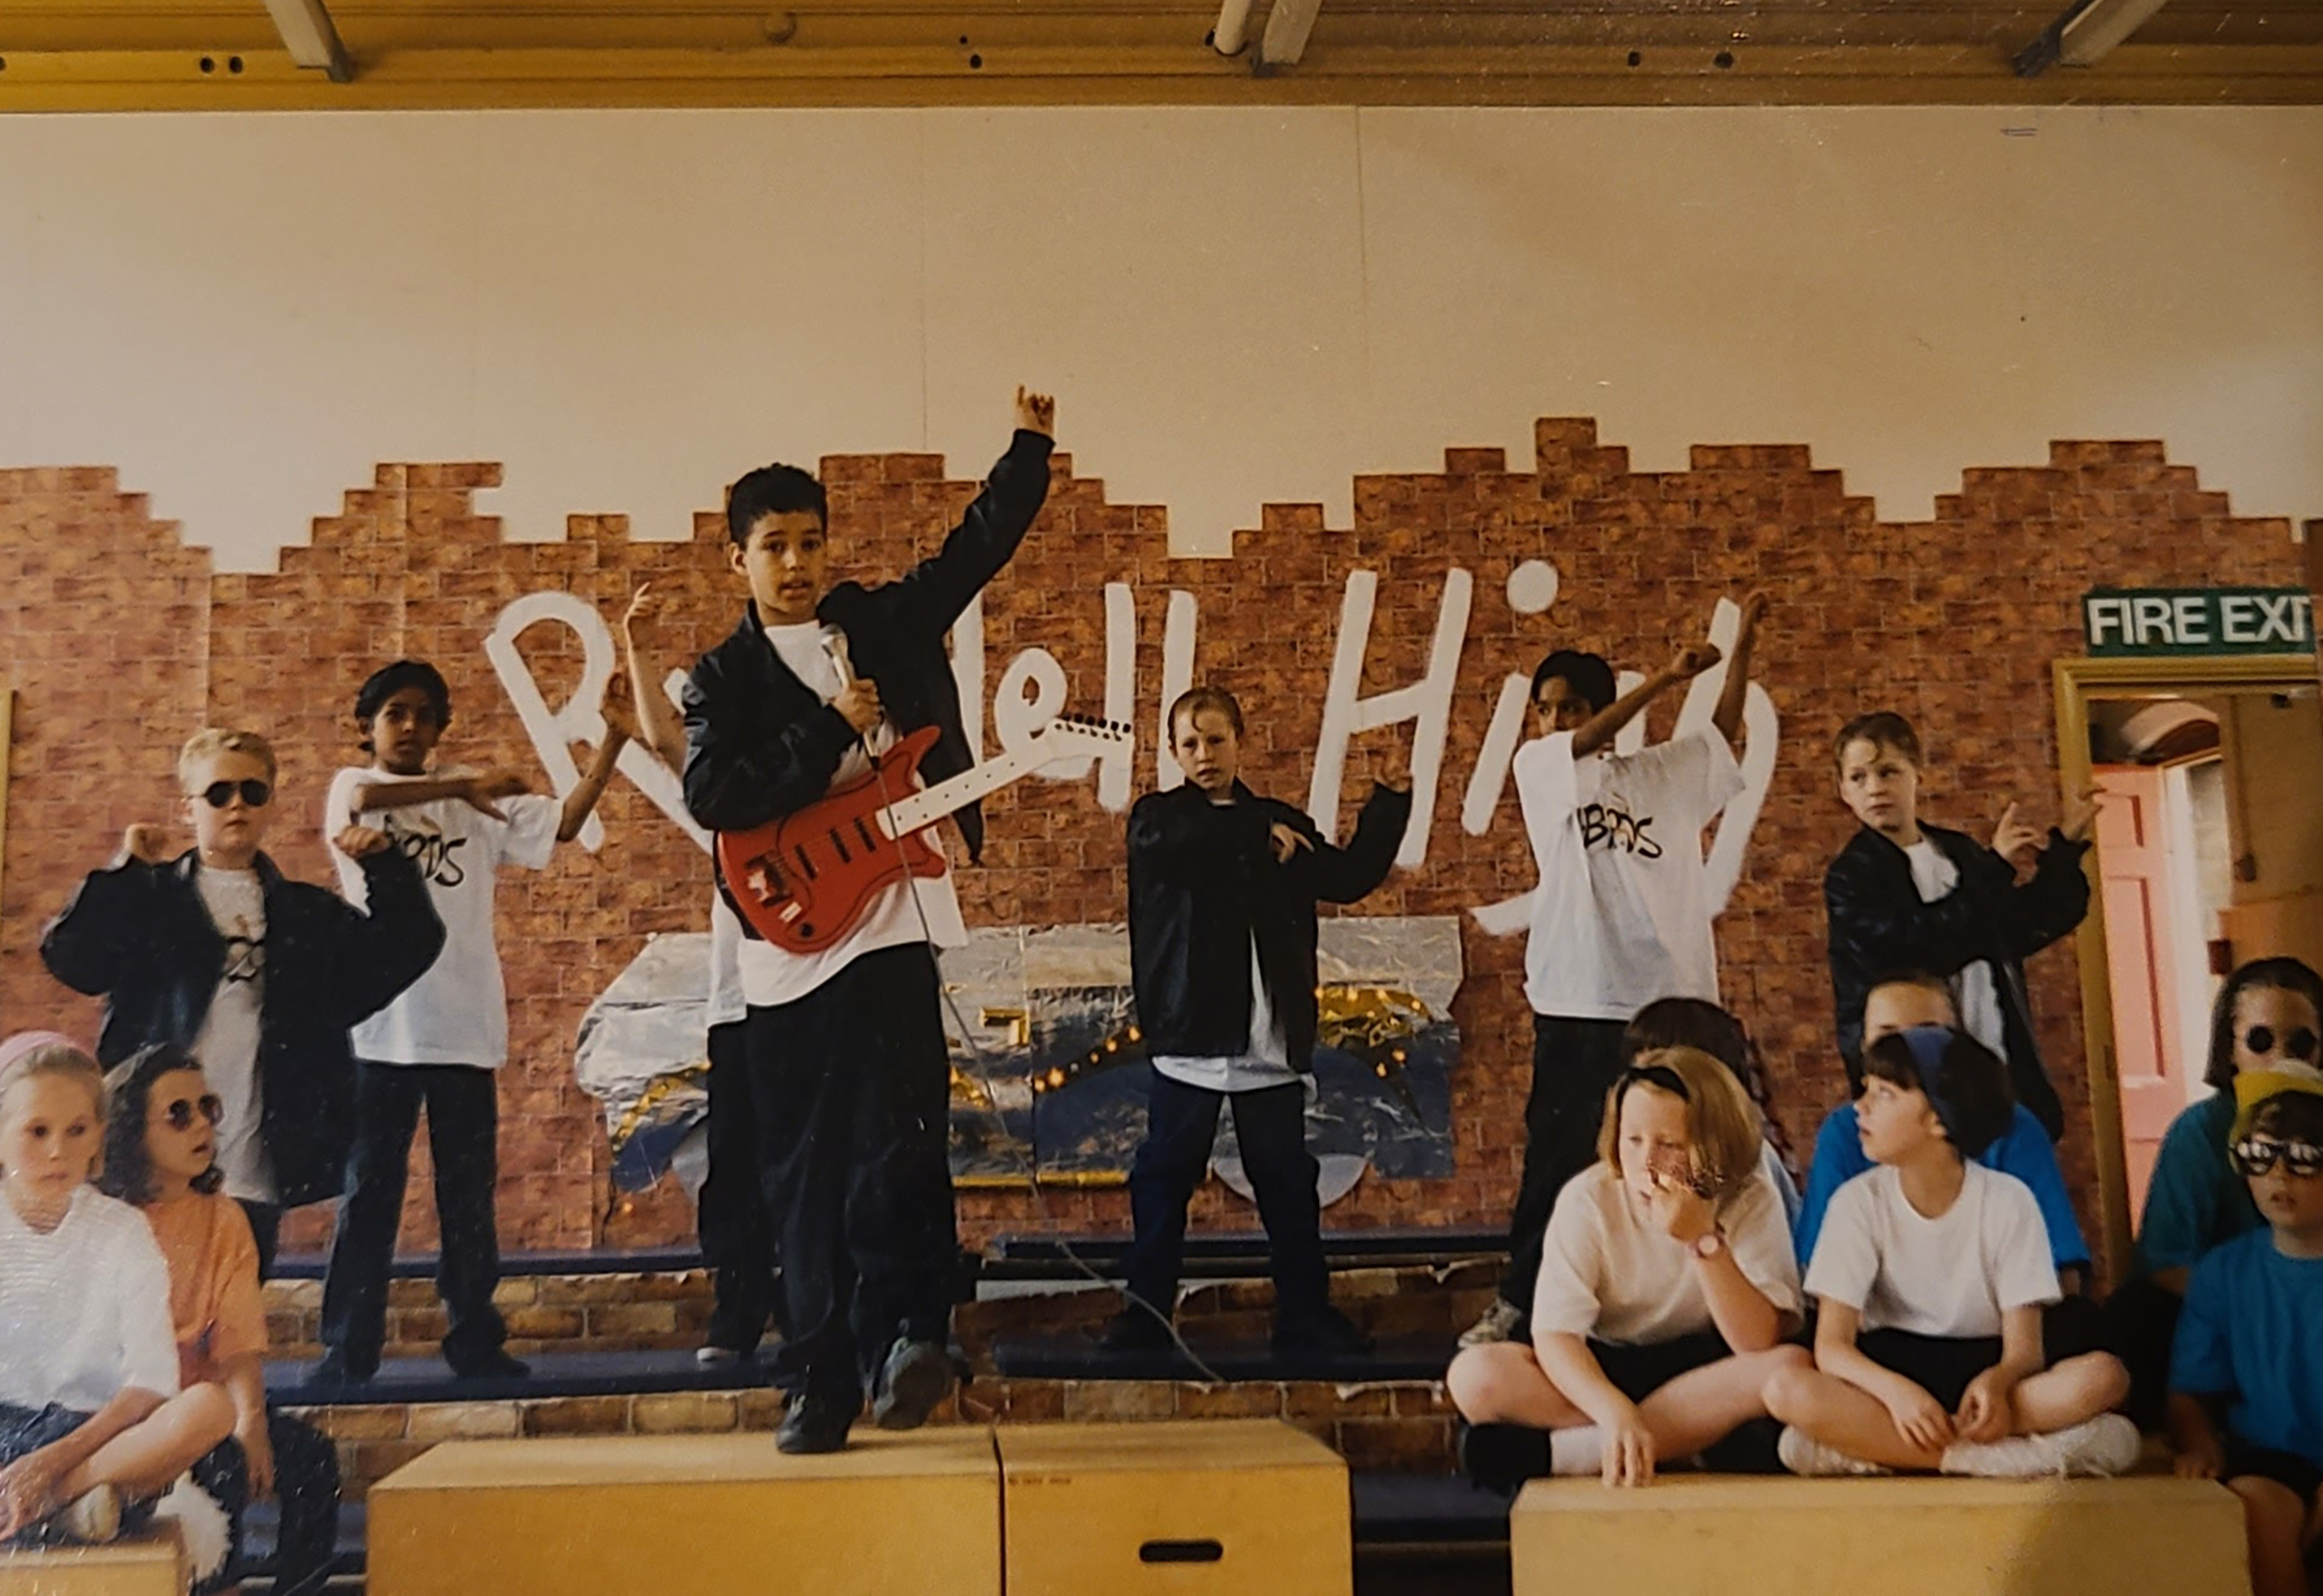 Benjamin Alexander as Kenickie singing Grease Lightning at his primary school's rendition of Grease. 1993, Wellingborough, England.